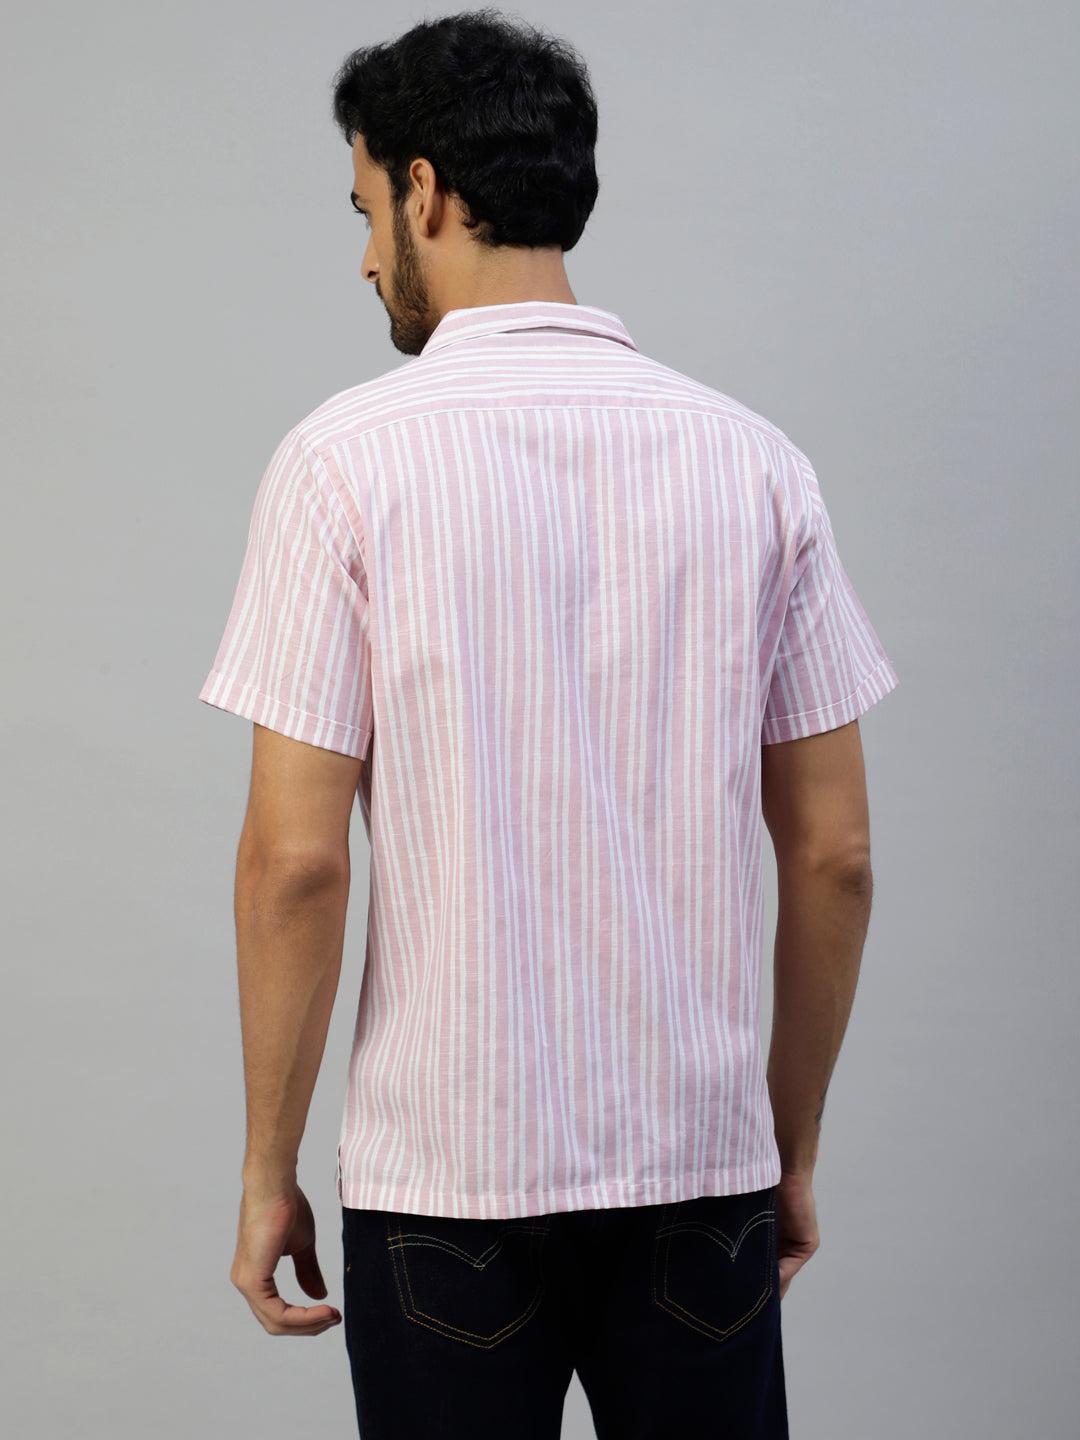 Don Vino Light Pink & White Stripes Shirts For Men